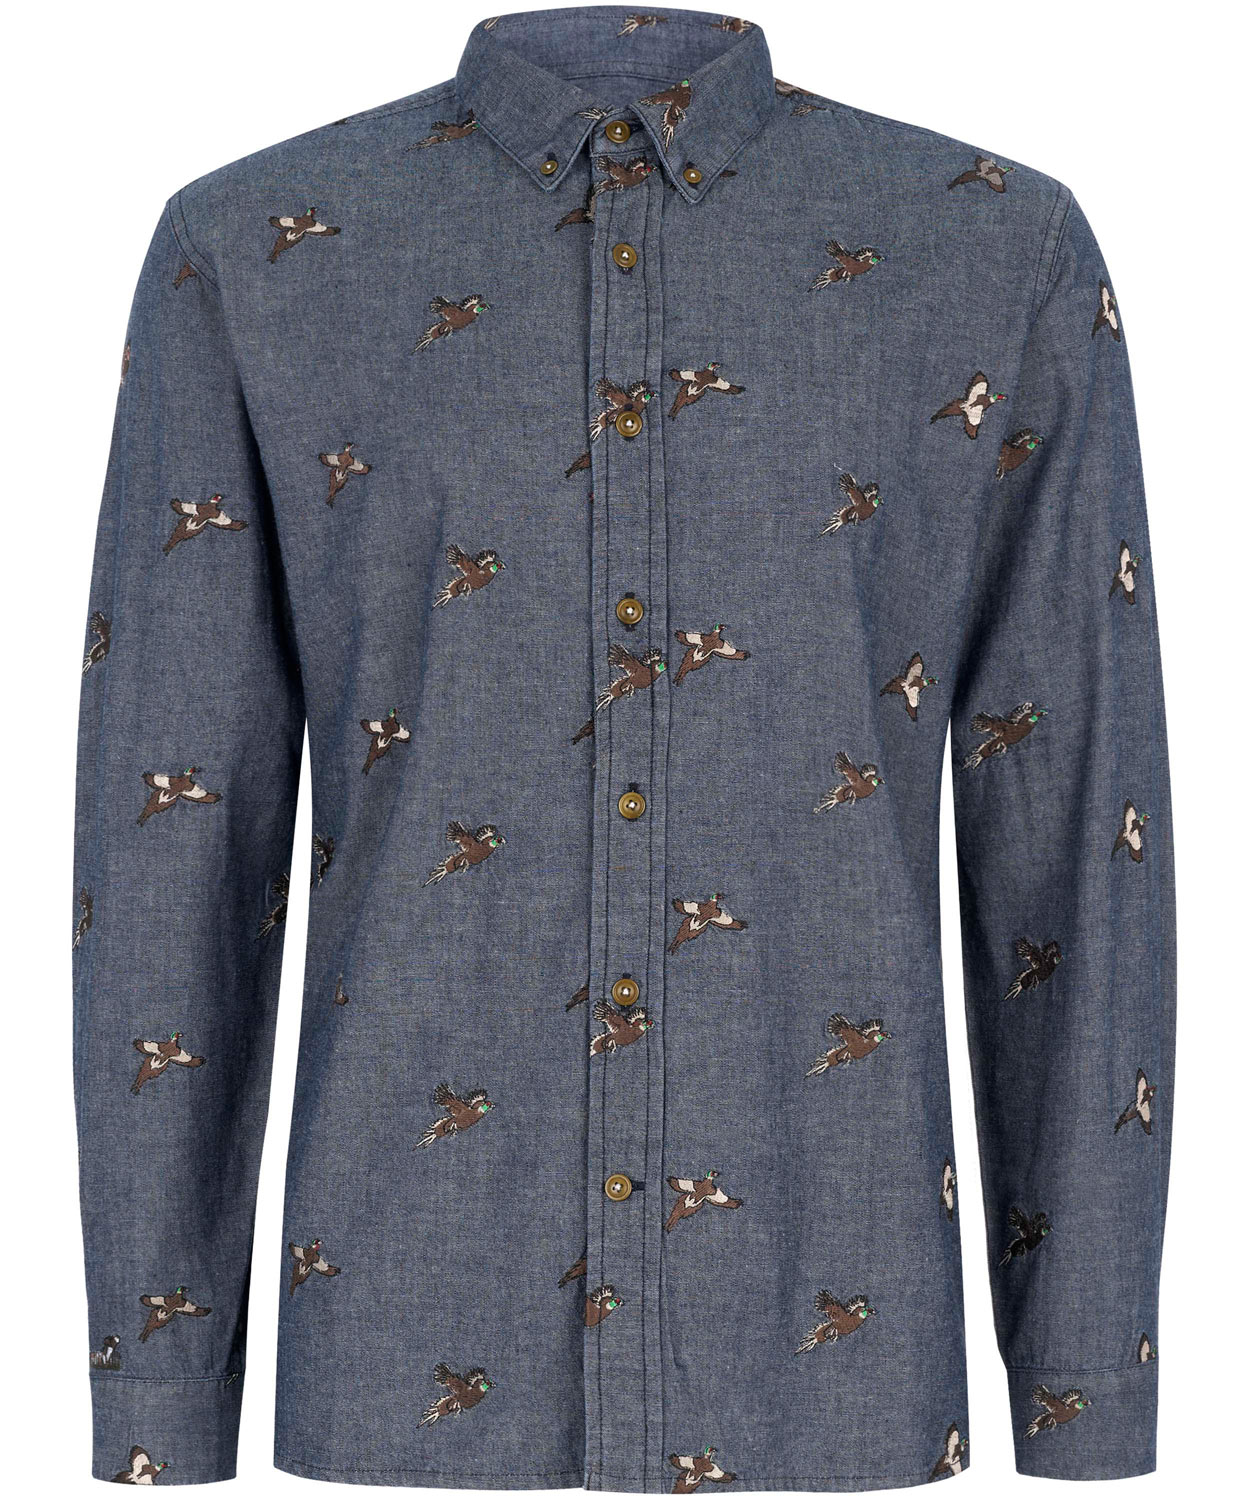 Lyst - Barbour Indigo Denim Pheasant Print Shirt in Blue for Men